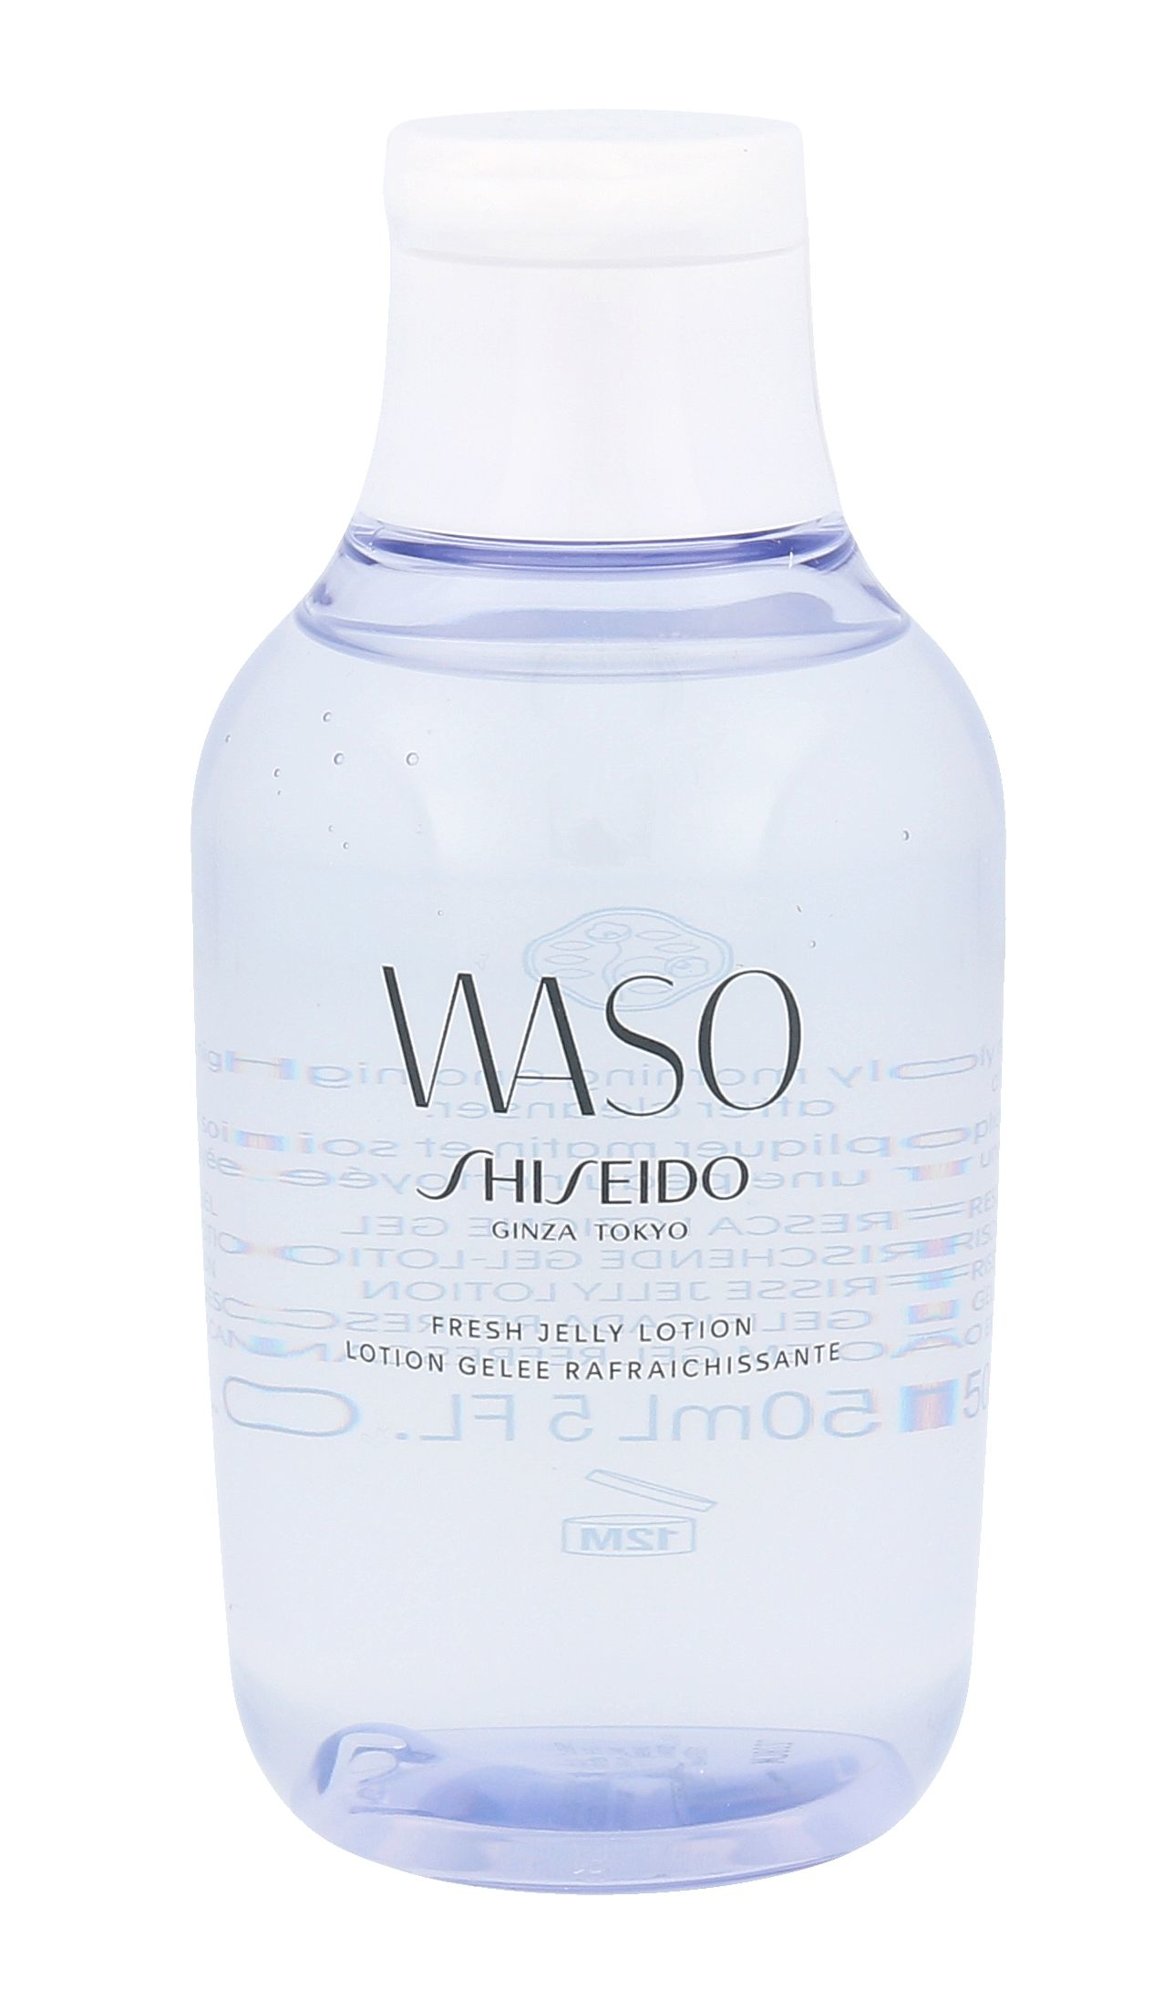 Shiseido Waso Fresh Jelly Lotion veido gelis